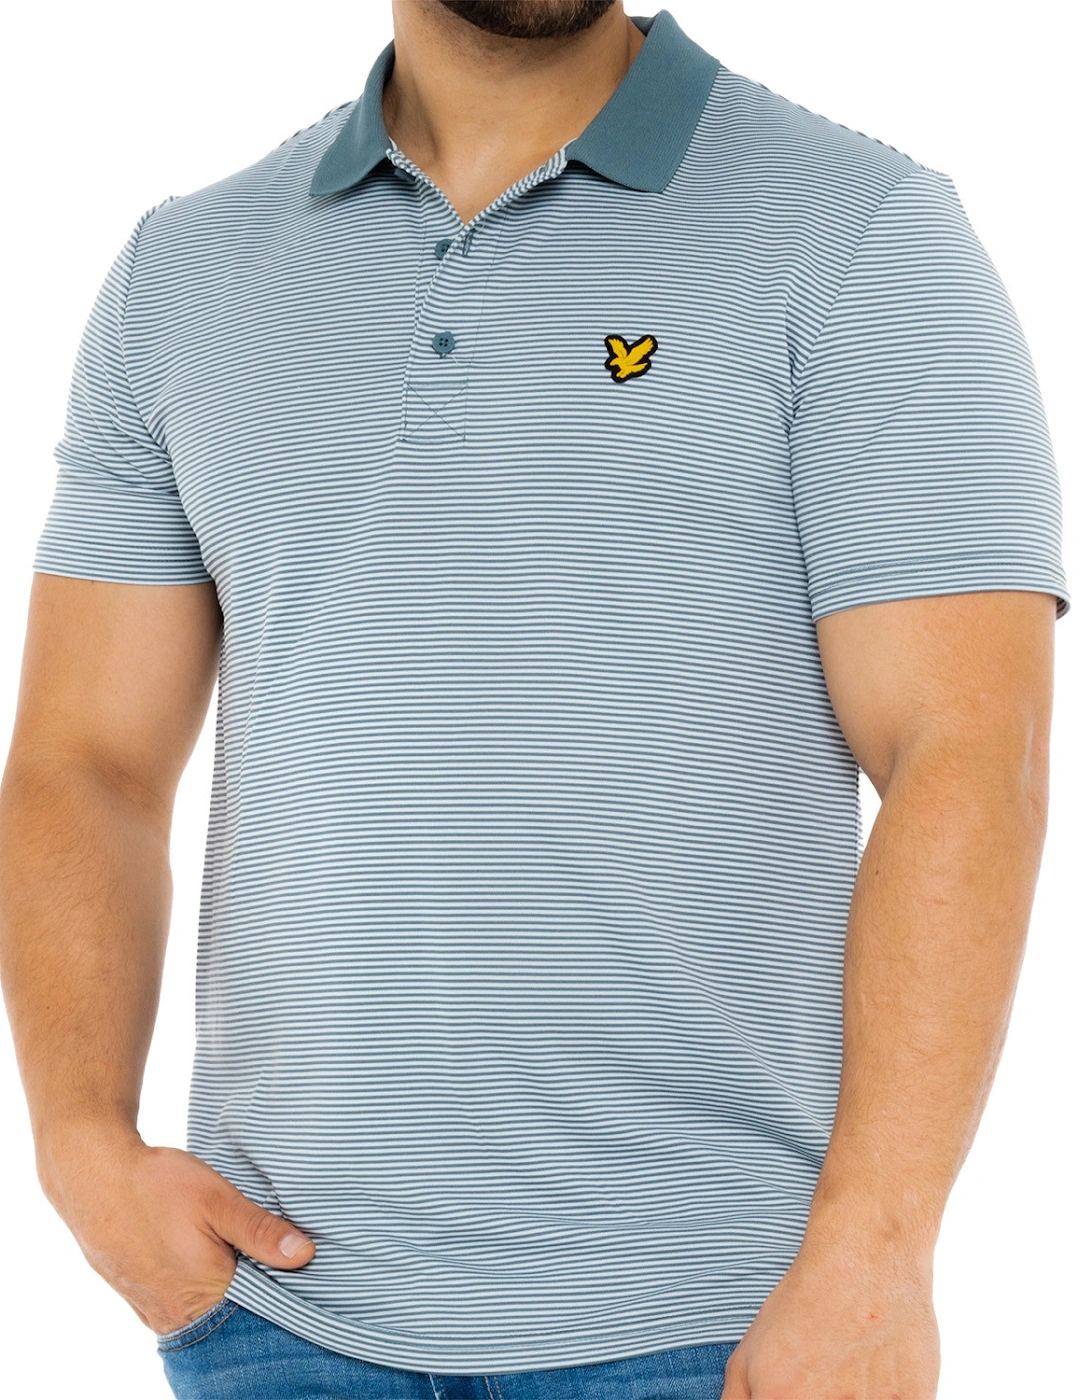 Lyle & Scott Mens Golf Microstripe Polo Shirt (Iron)